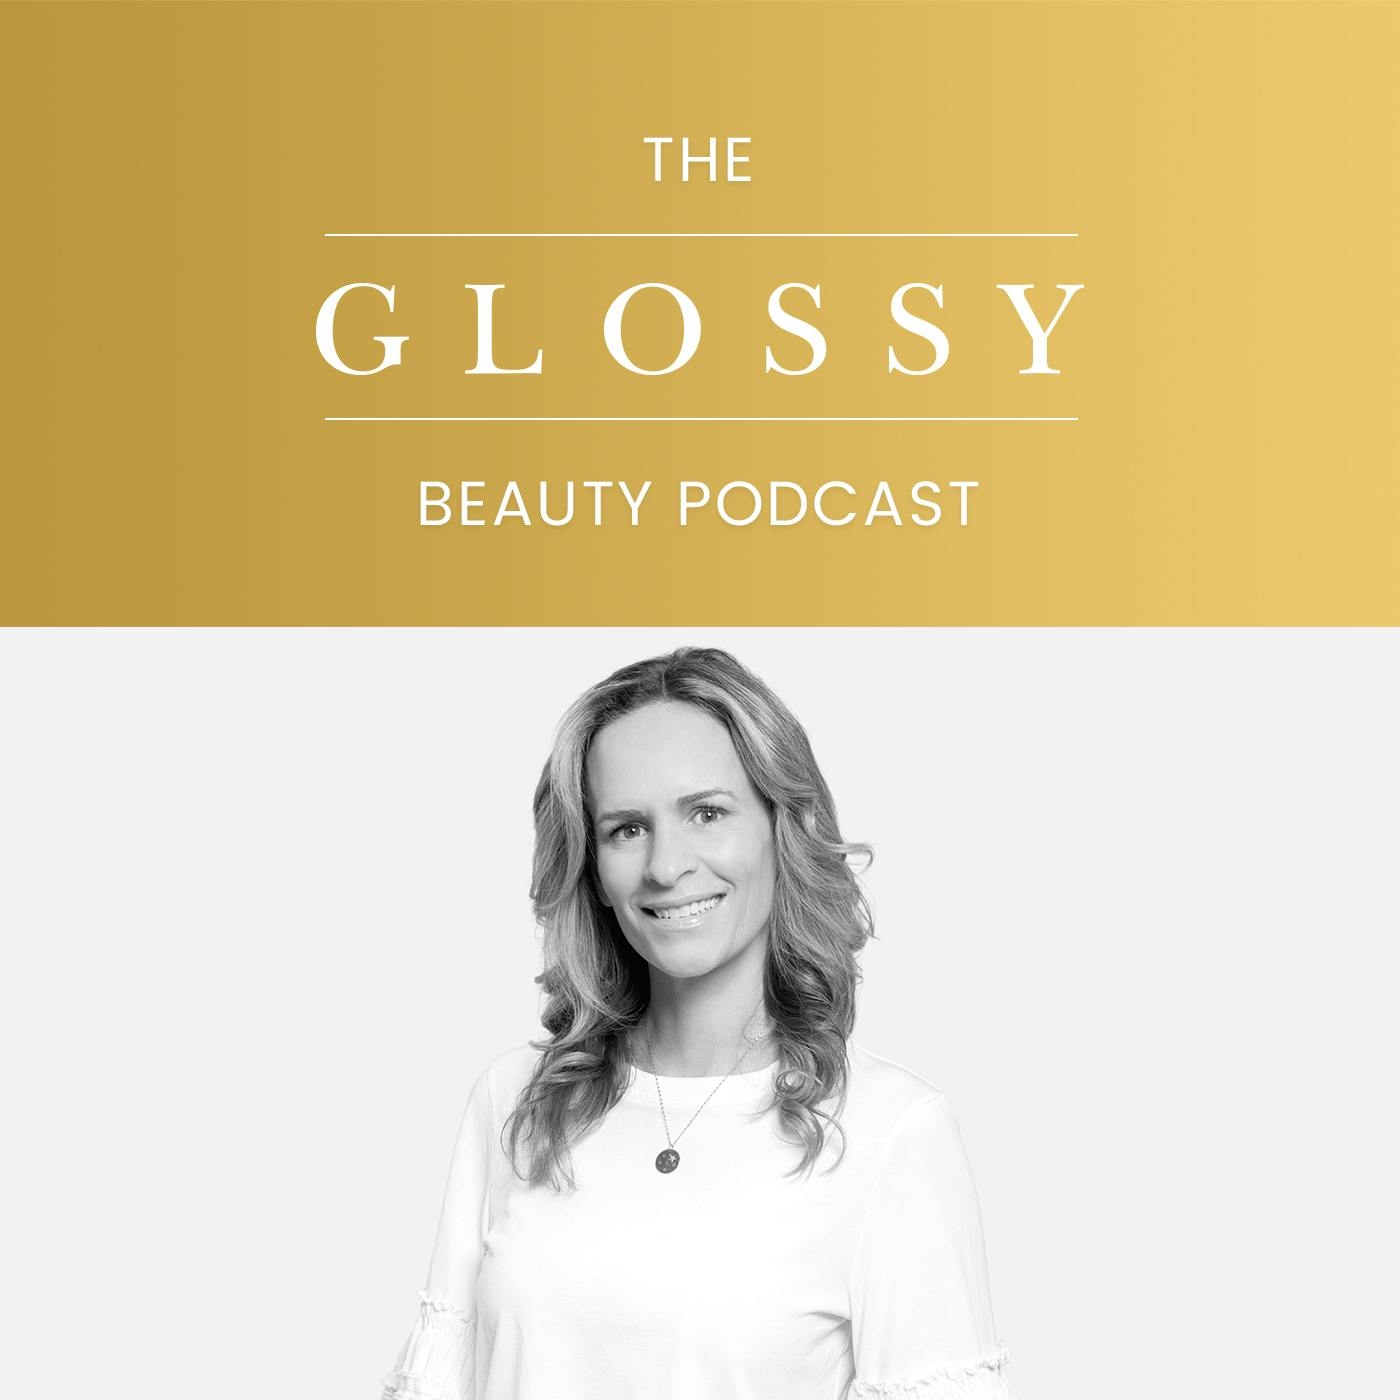 Kopari Beauty co-founder Gigi Goldman on how coconut oil is the new Windex